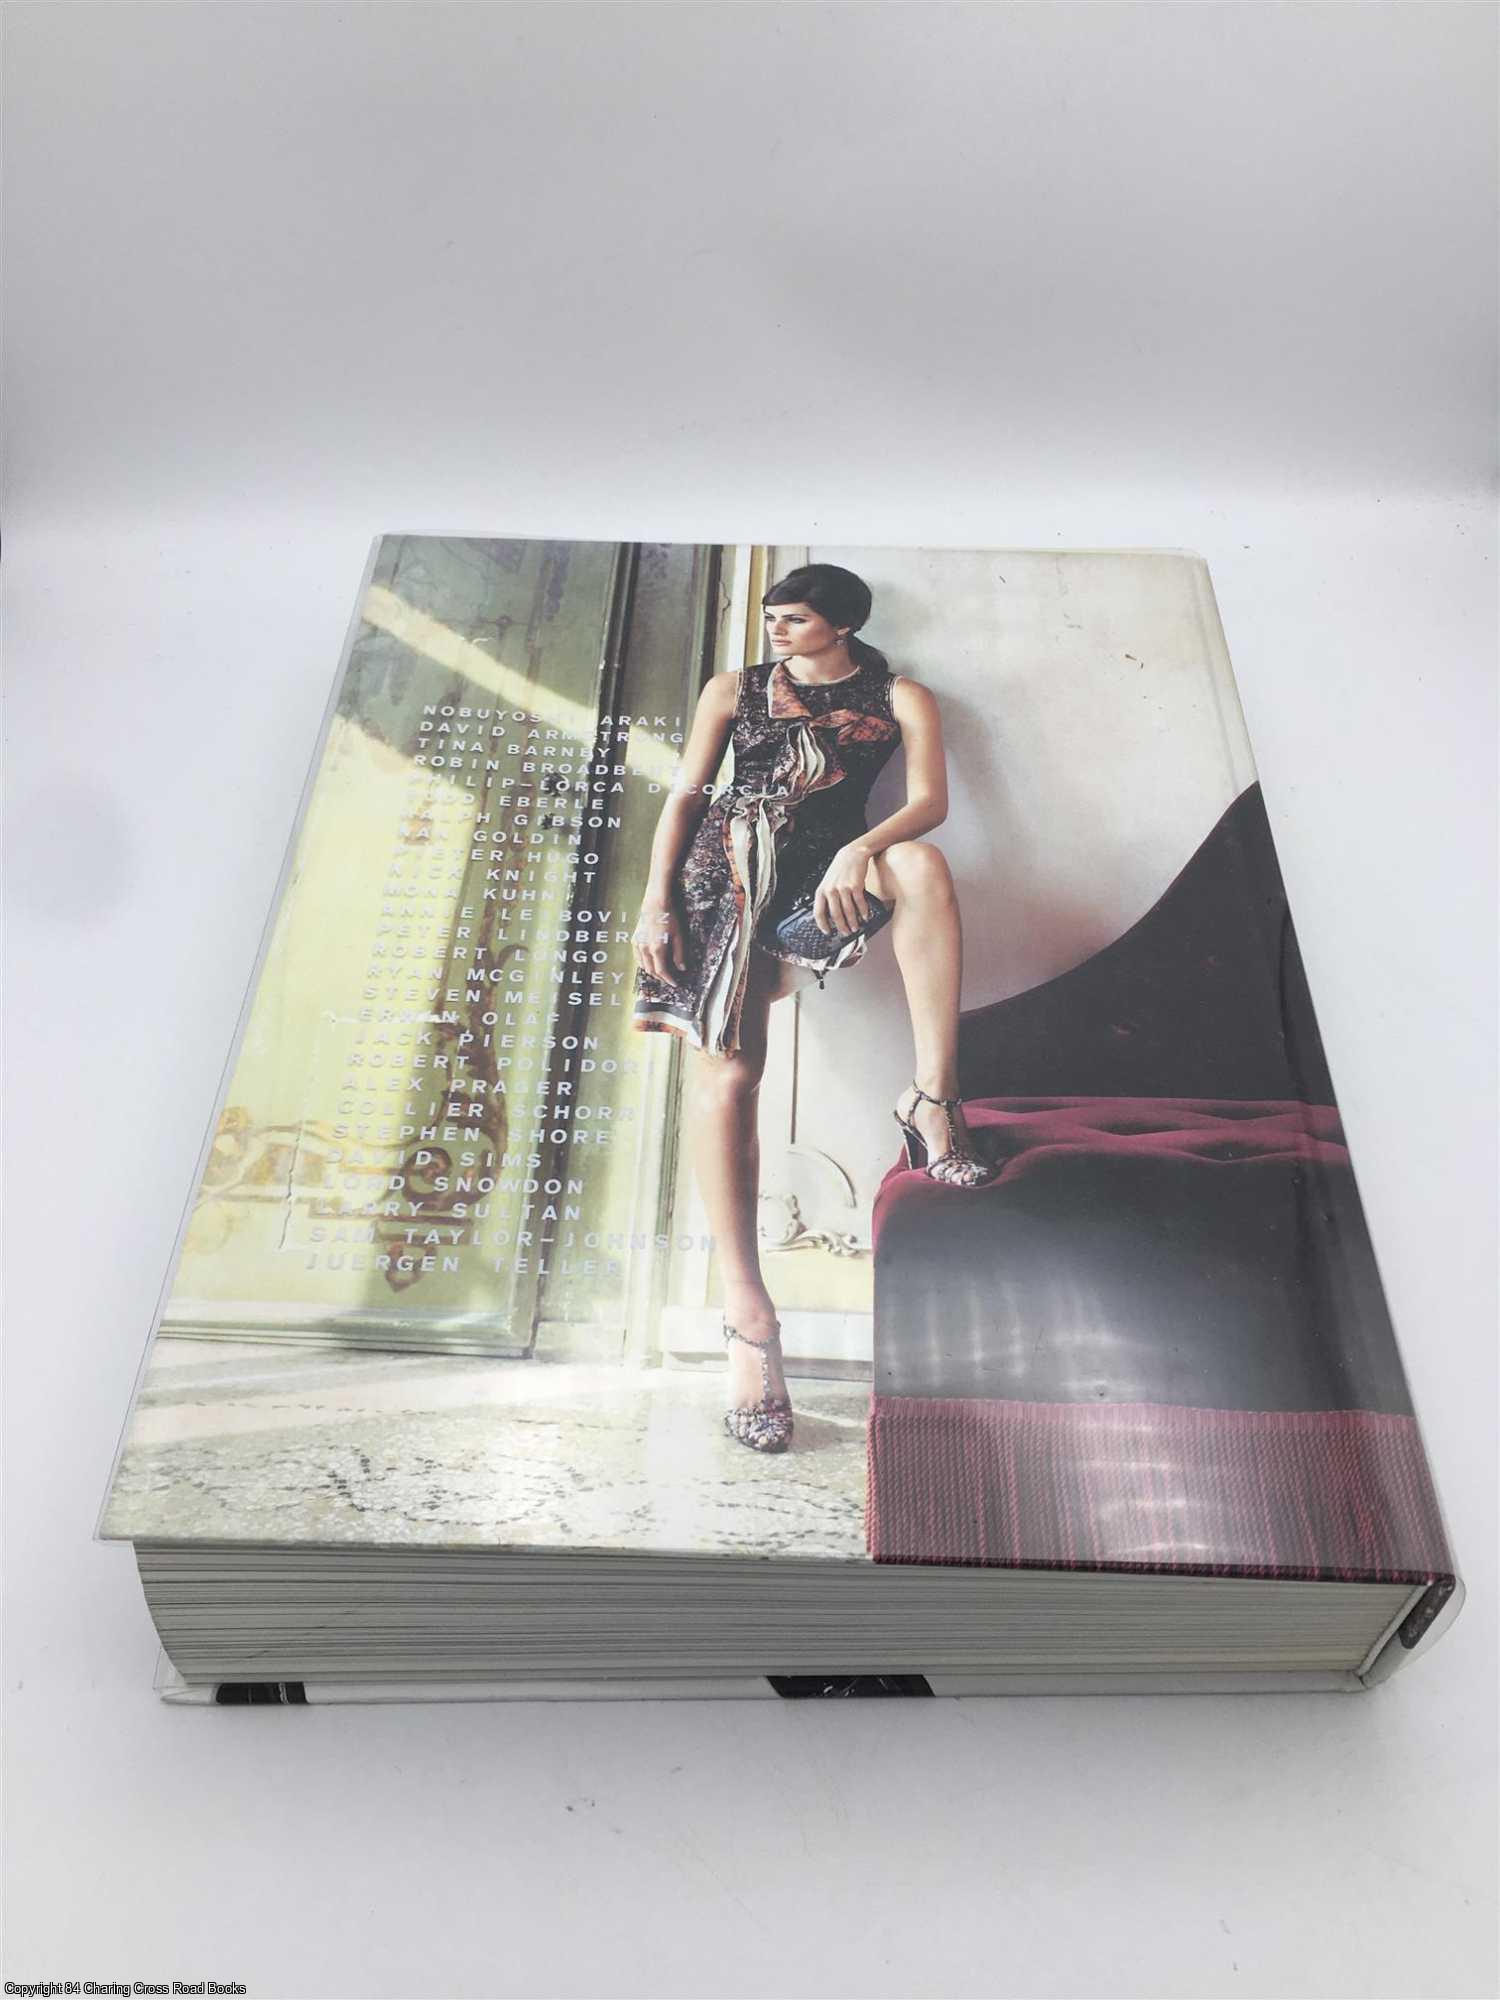 Bottega Veneta: Art of Collaboration by Tomas Maier on 84 Charing Cross  Rare Books